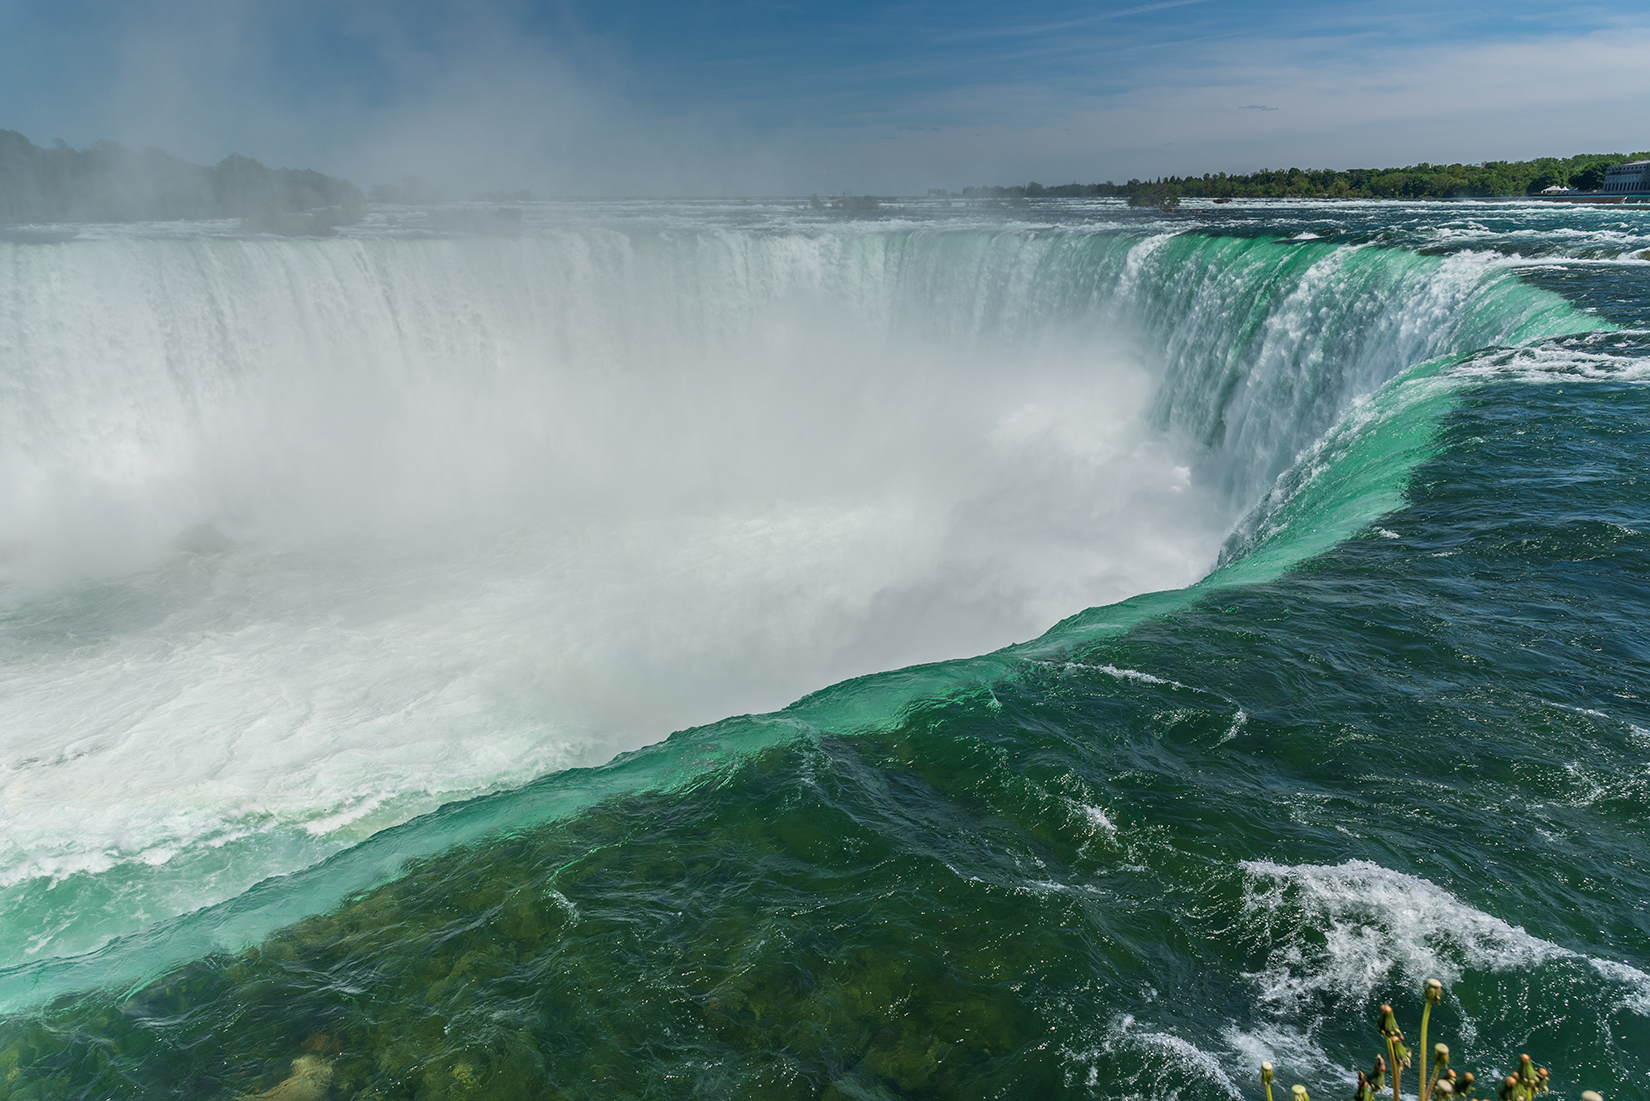 The Niagara Falls viewpoint within feet of the Horseshoe Falls.